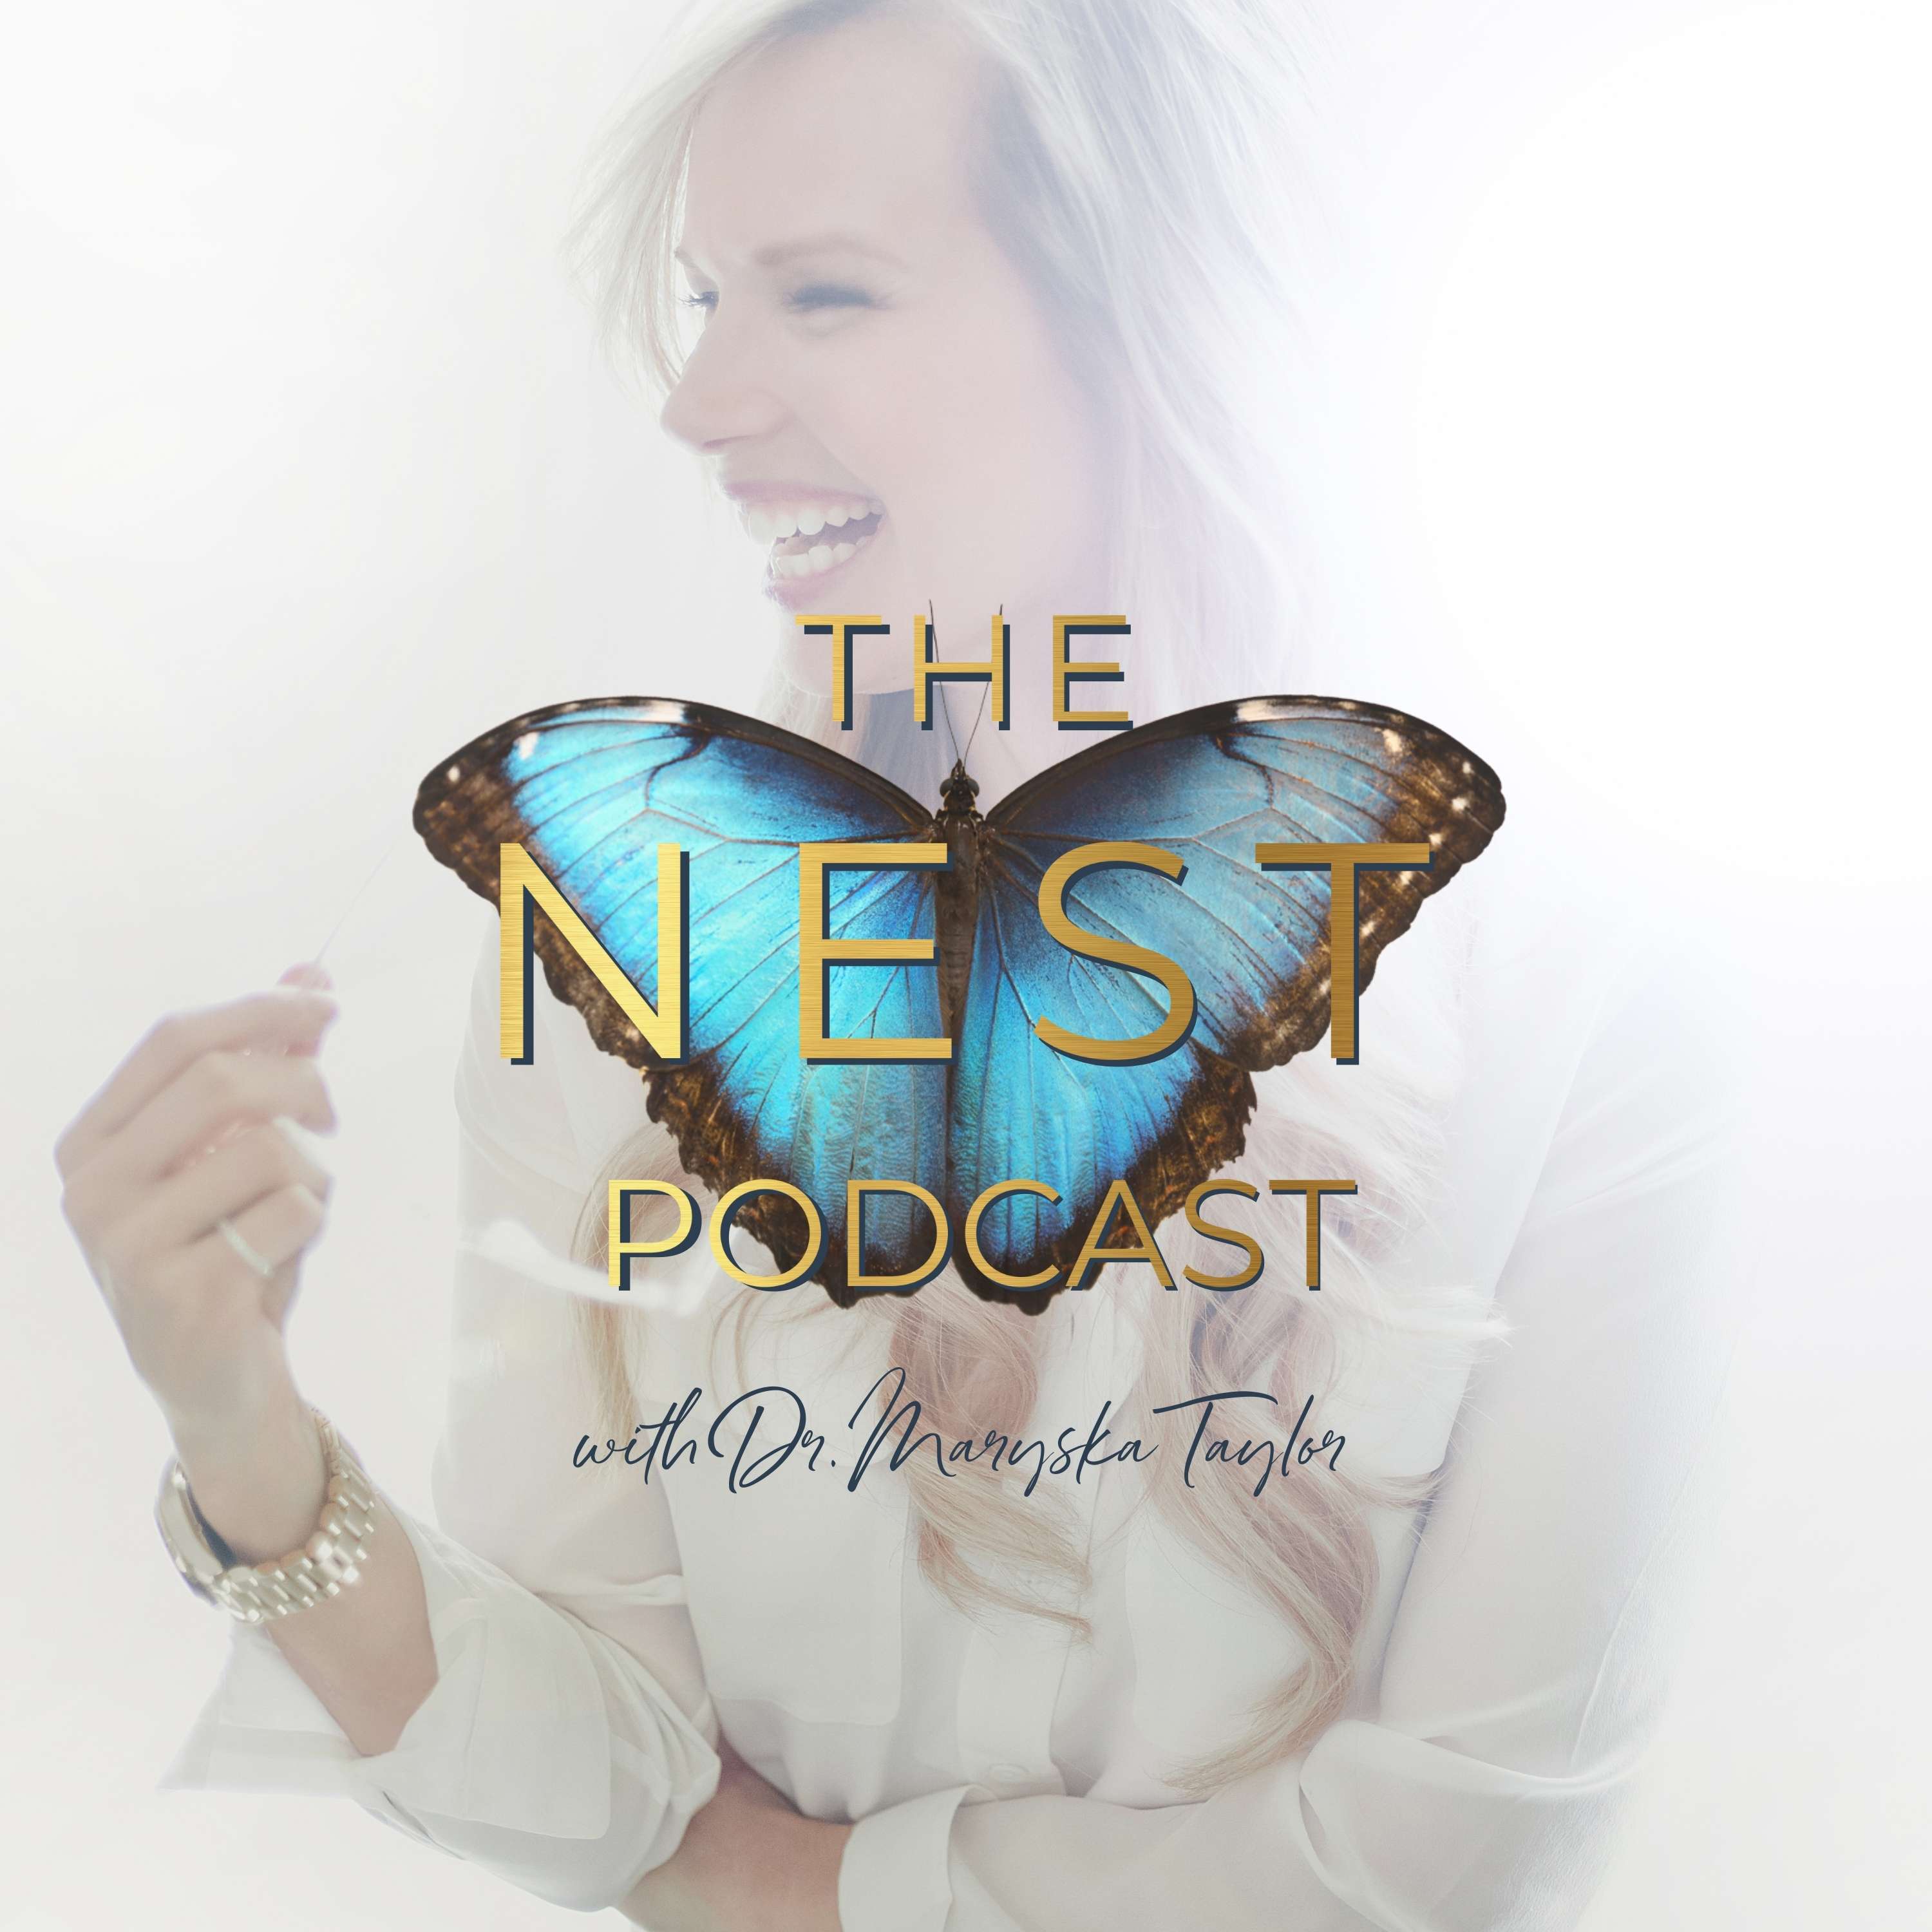 Artwork for podcast The Nest Podcast with Dr. Maryska Taylor